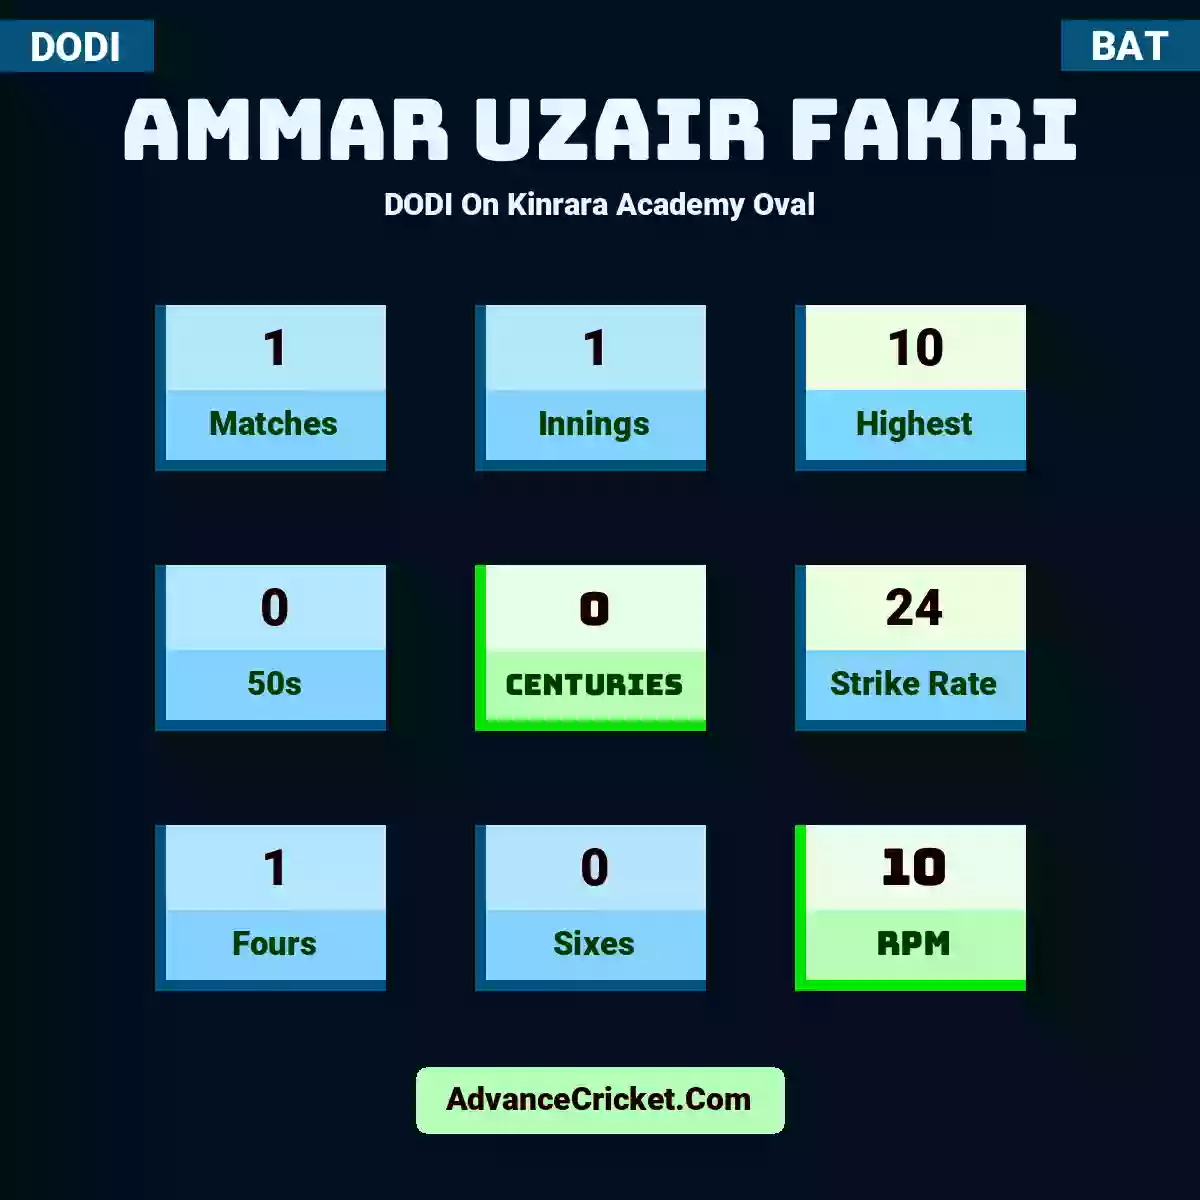 Ammar Uzair Fakri DODI  On Kinrara Academy Oval, Ammar Uzair Fakri played 1 matches, scored 10 runs as highest, 0 half-centuries, and 0 centuries, with a strike rate of 24. A.Uzair.Fakri hit 1 fours and 0 sixes, with an RPM of 10.